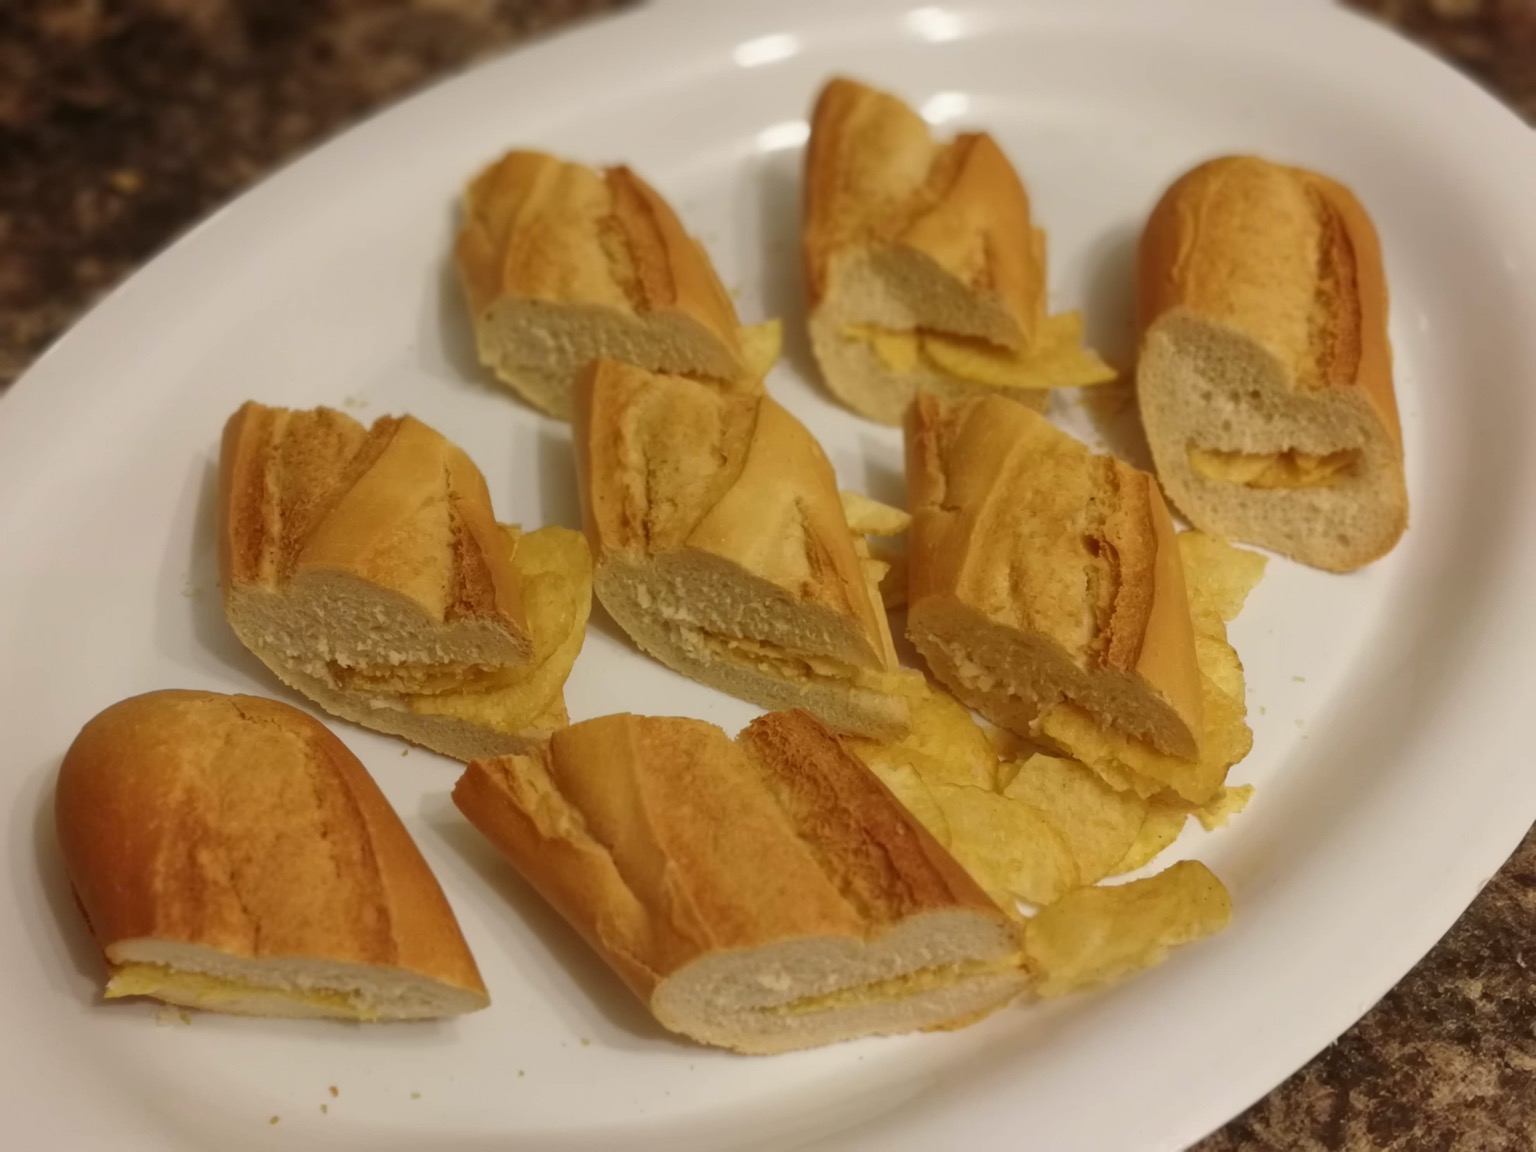 Eight baguette segments filled with potato crisps